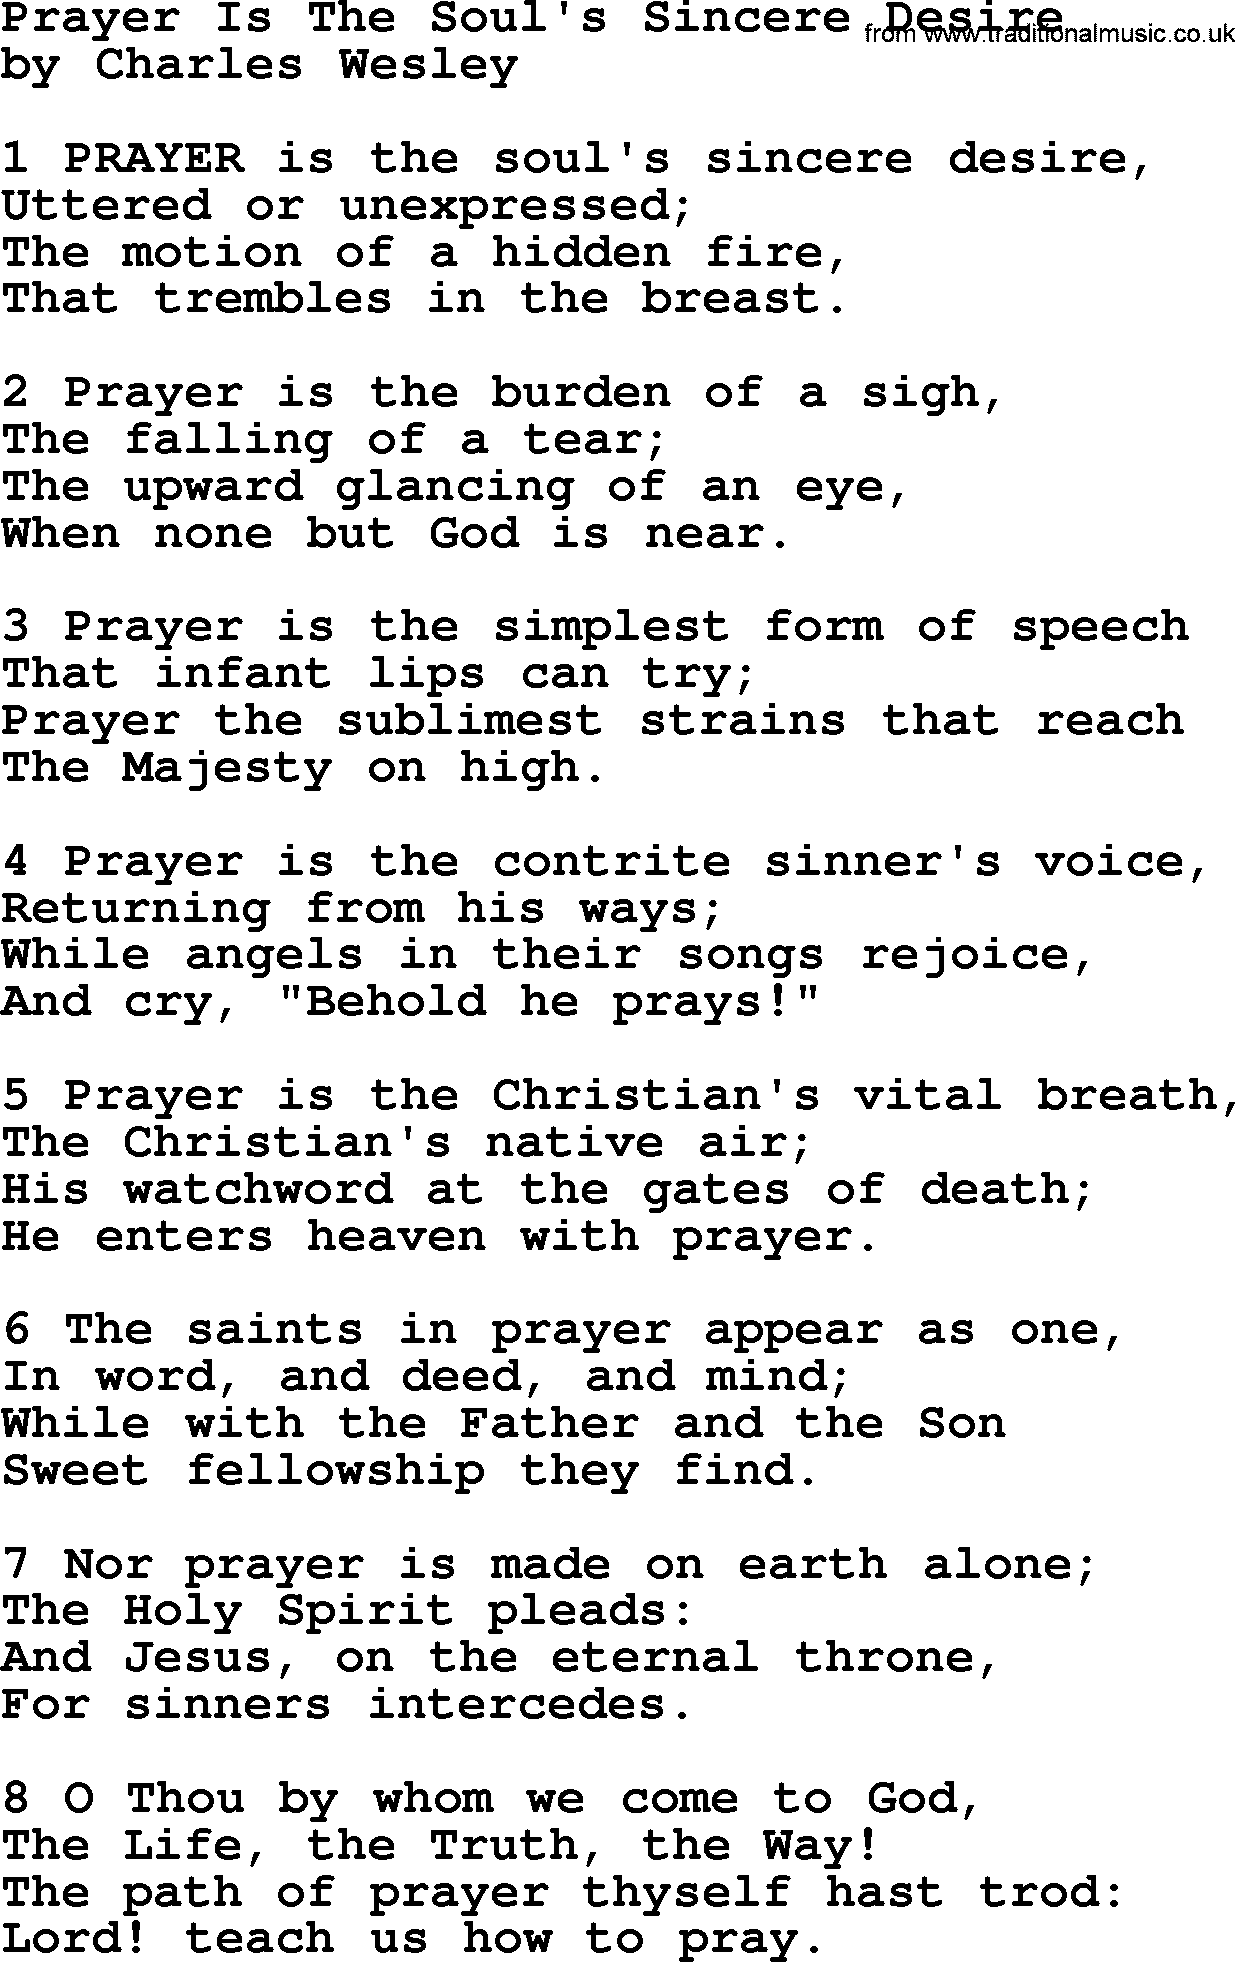 Charles Wesley hymn: Prayer Is The Soul's Sincere Desire, lyrics